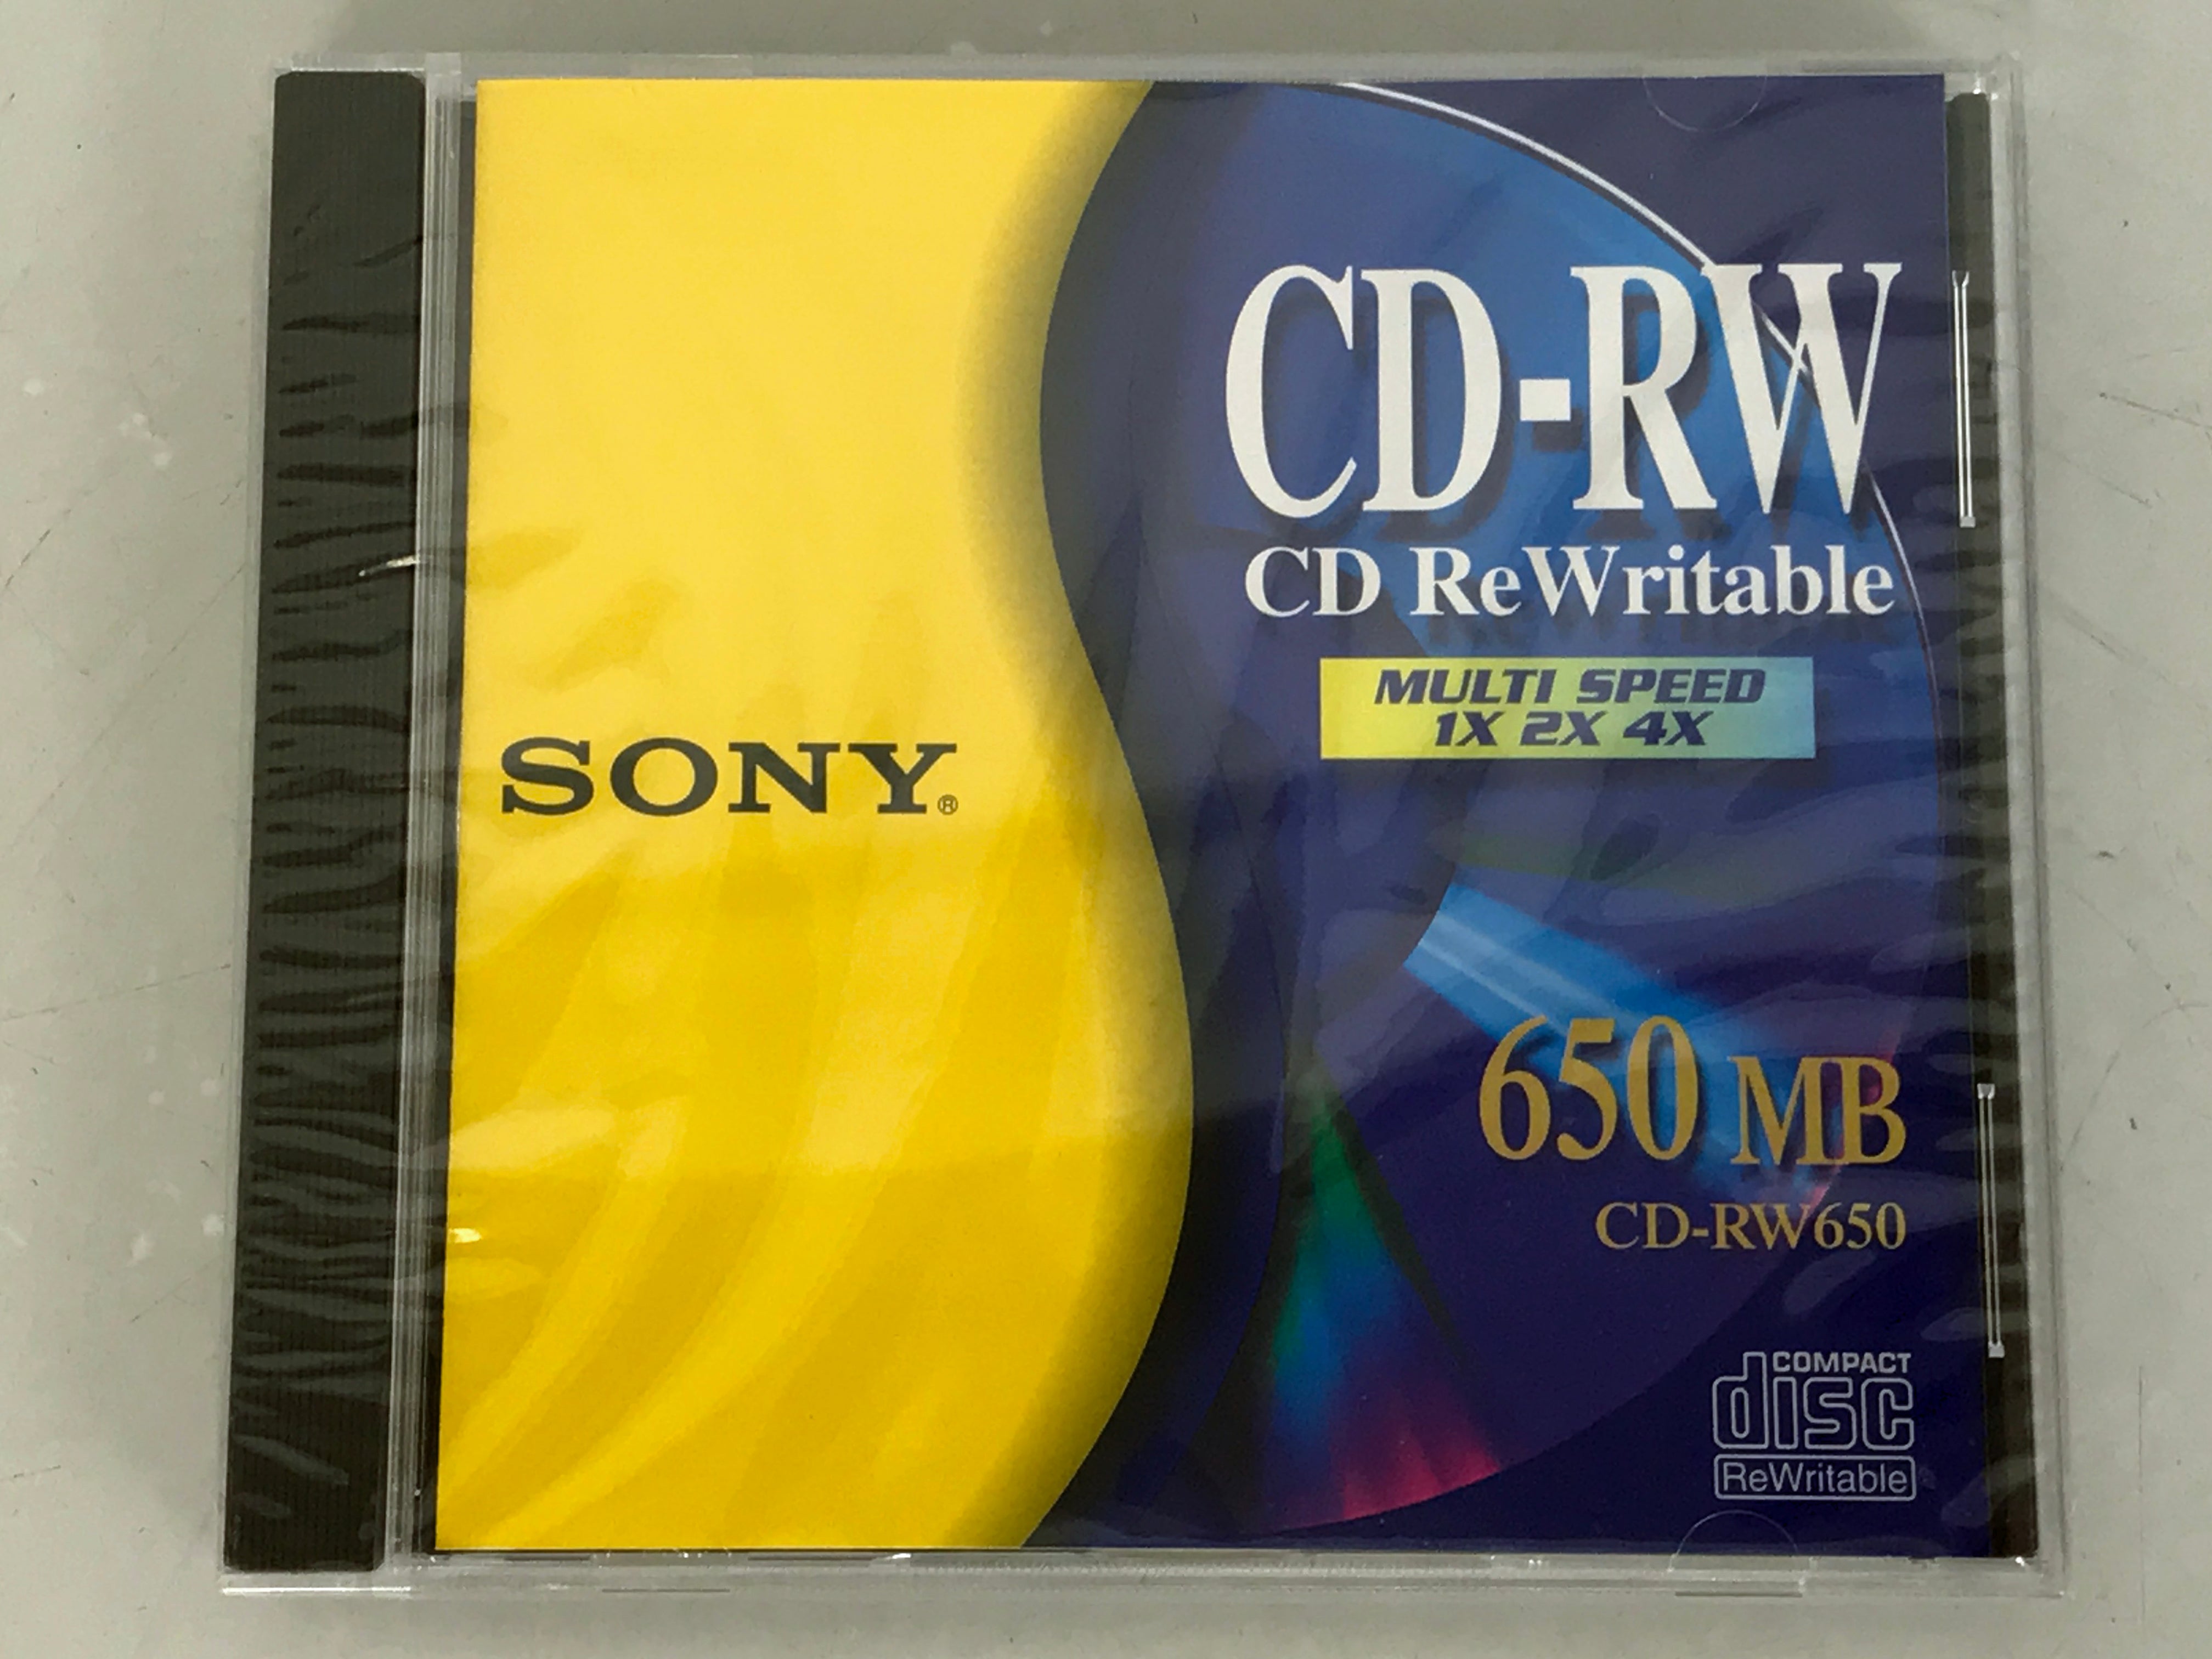 Assorted 650MB CD-RW